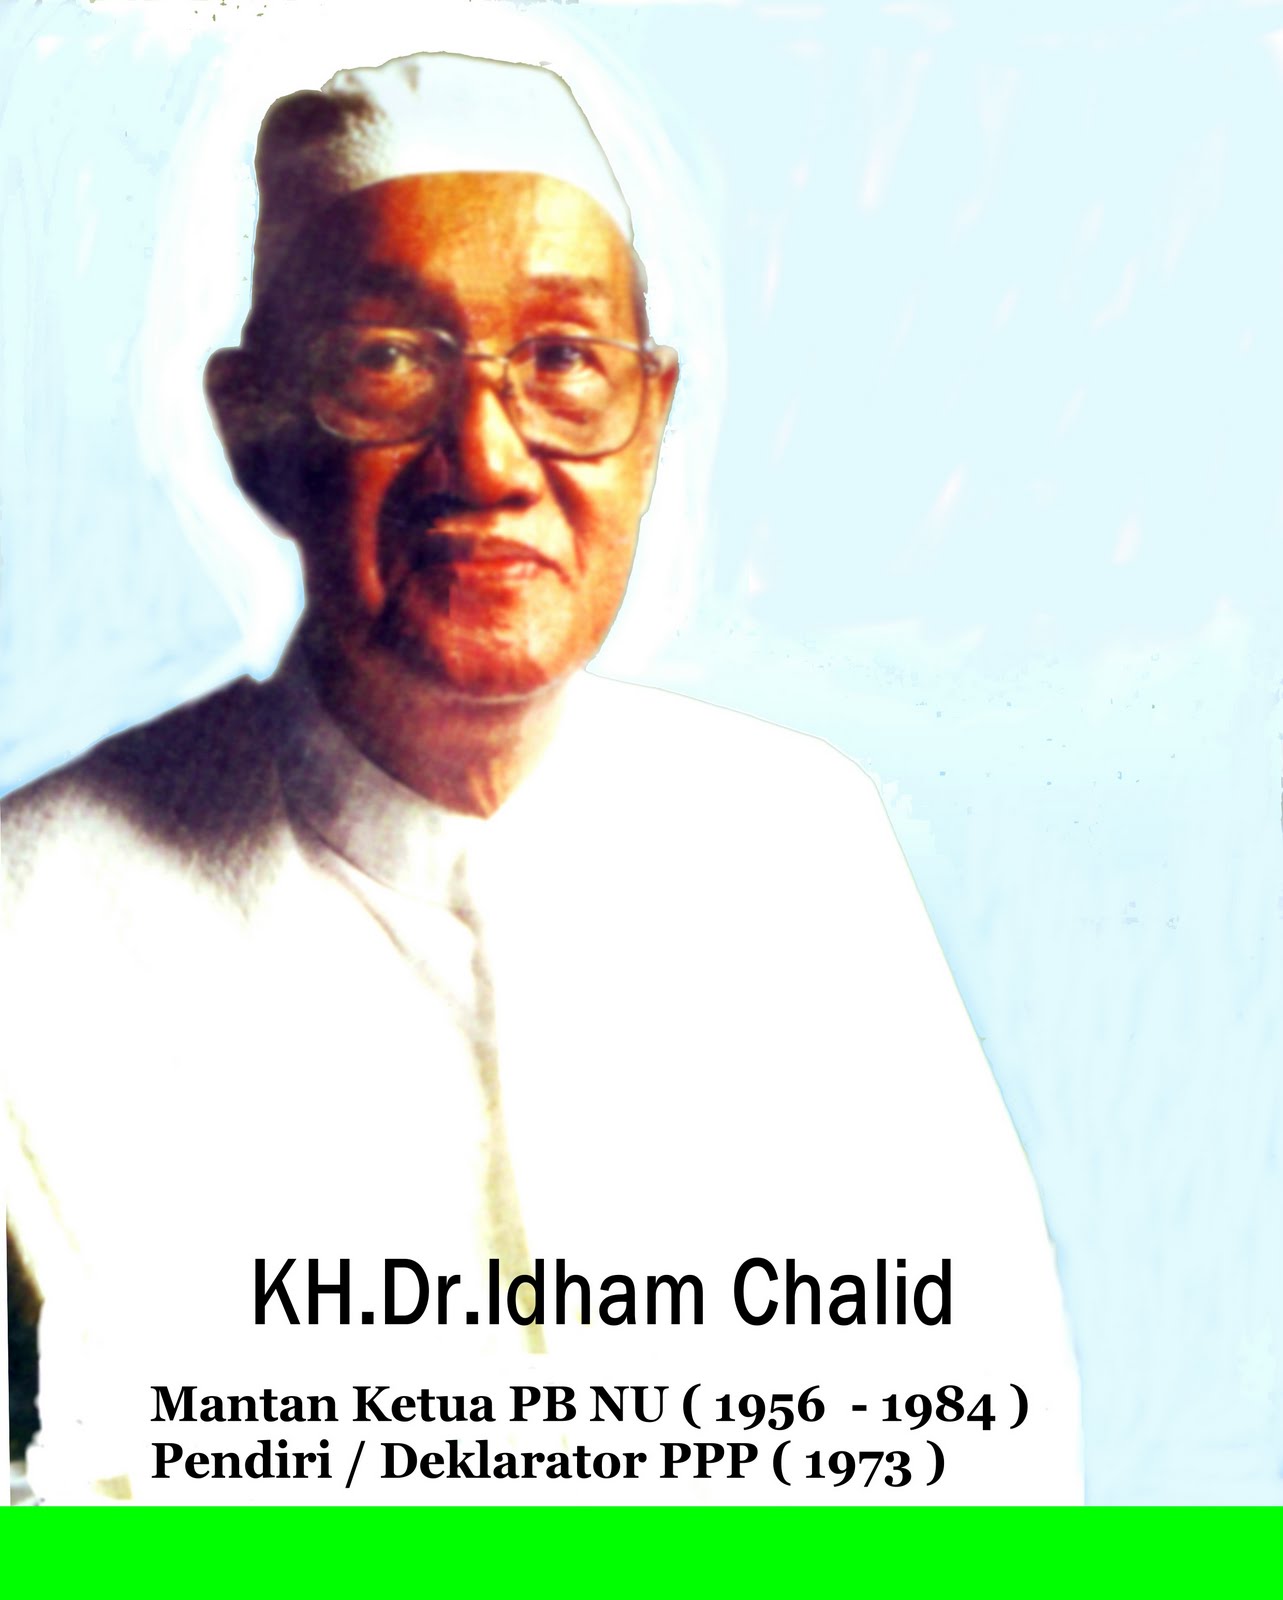 BIOGRAFI DR.KH. IDHAM CHALID